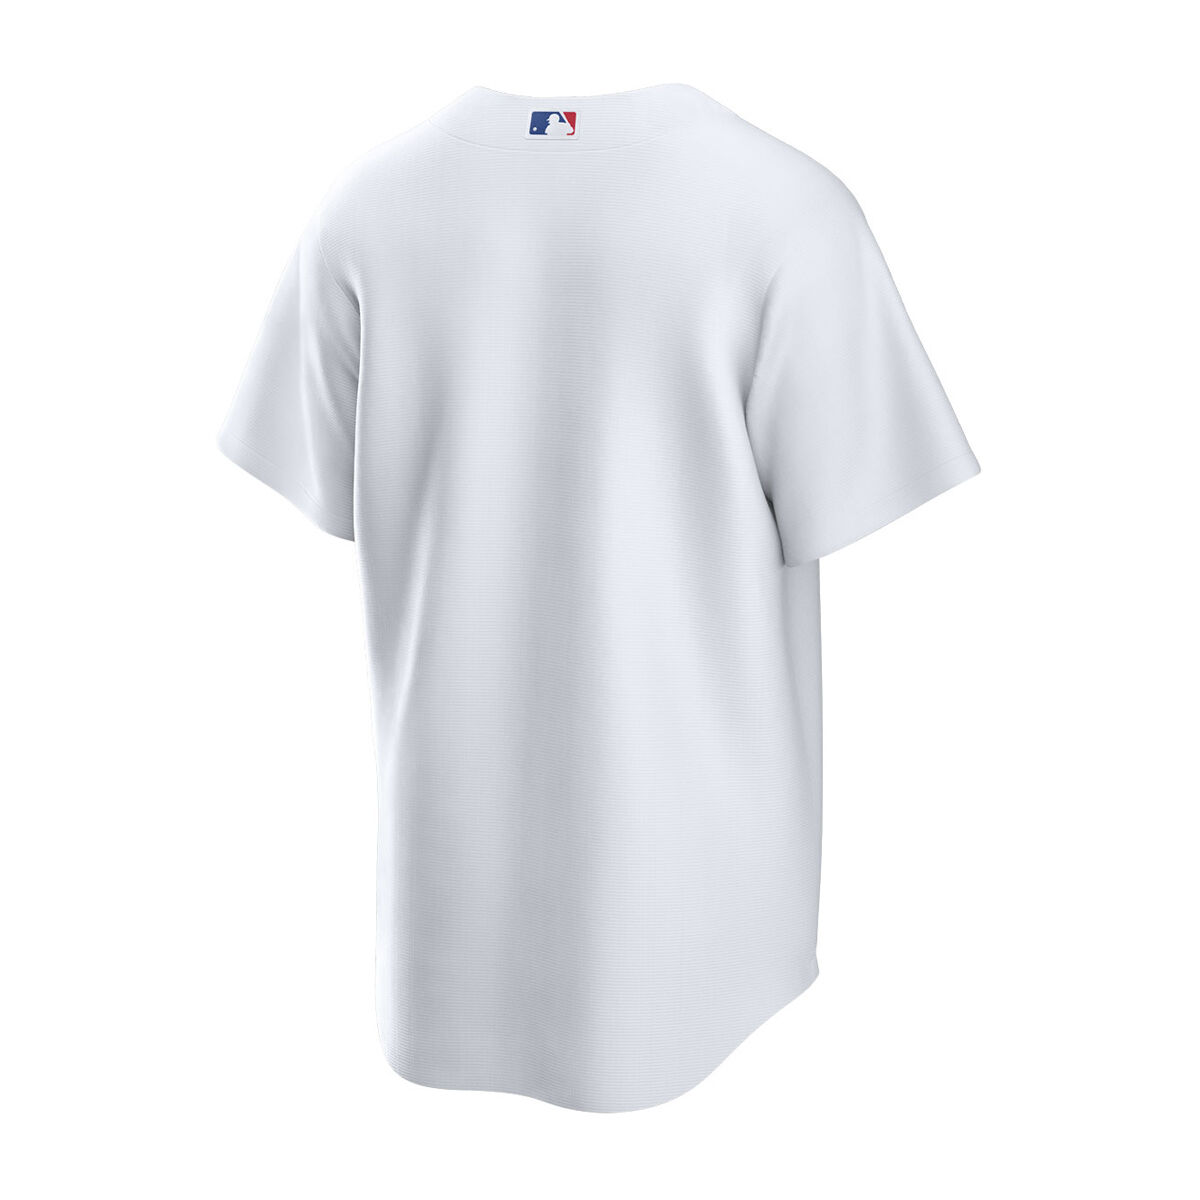 Replica Mono Baseball Jersey- Mens Black/White